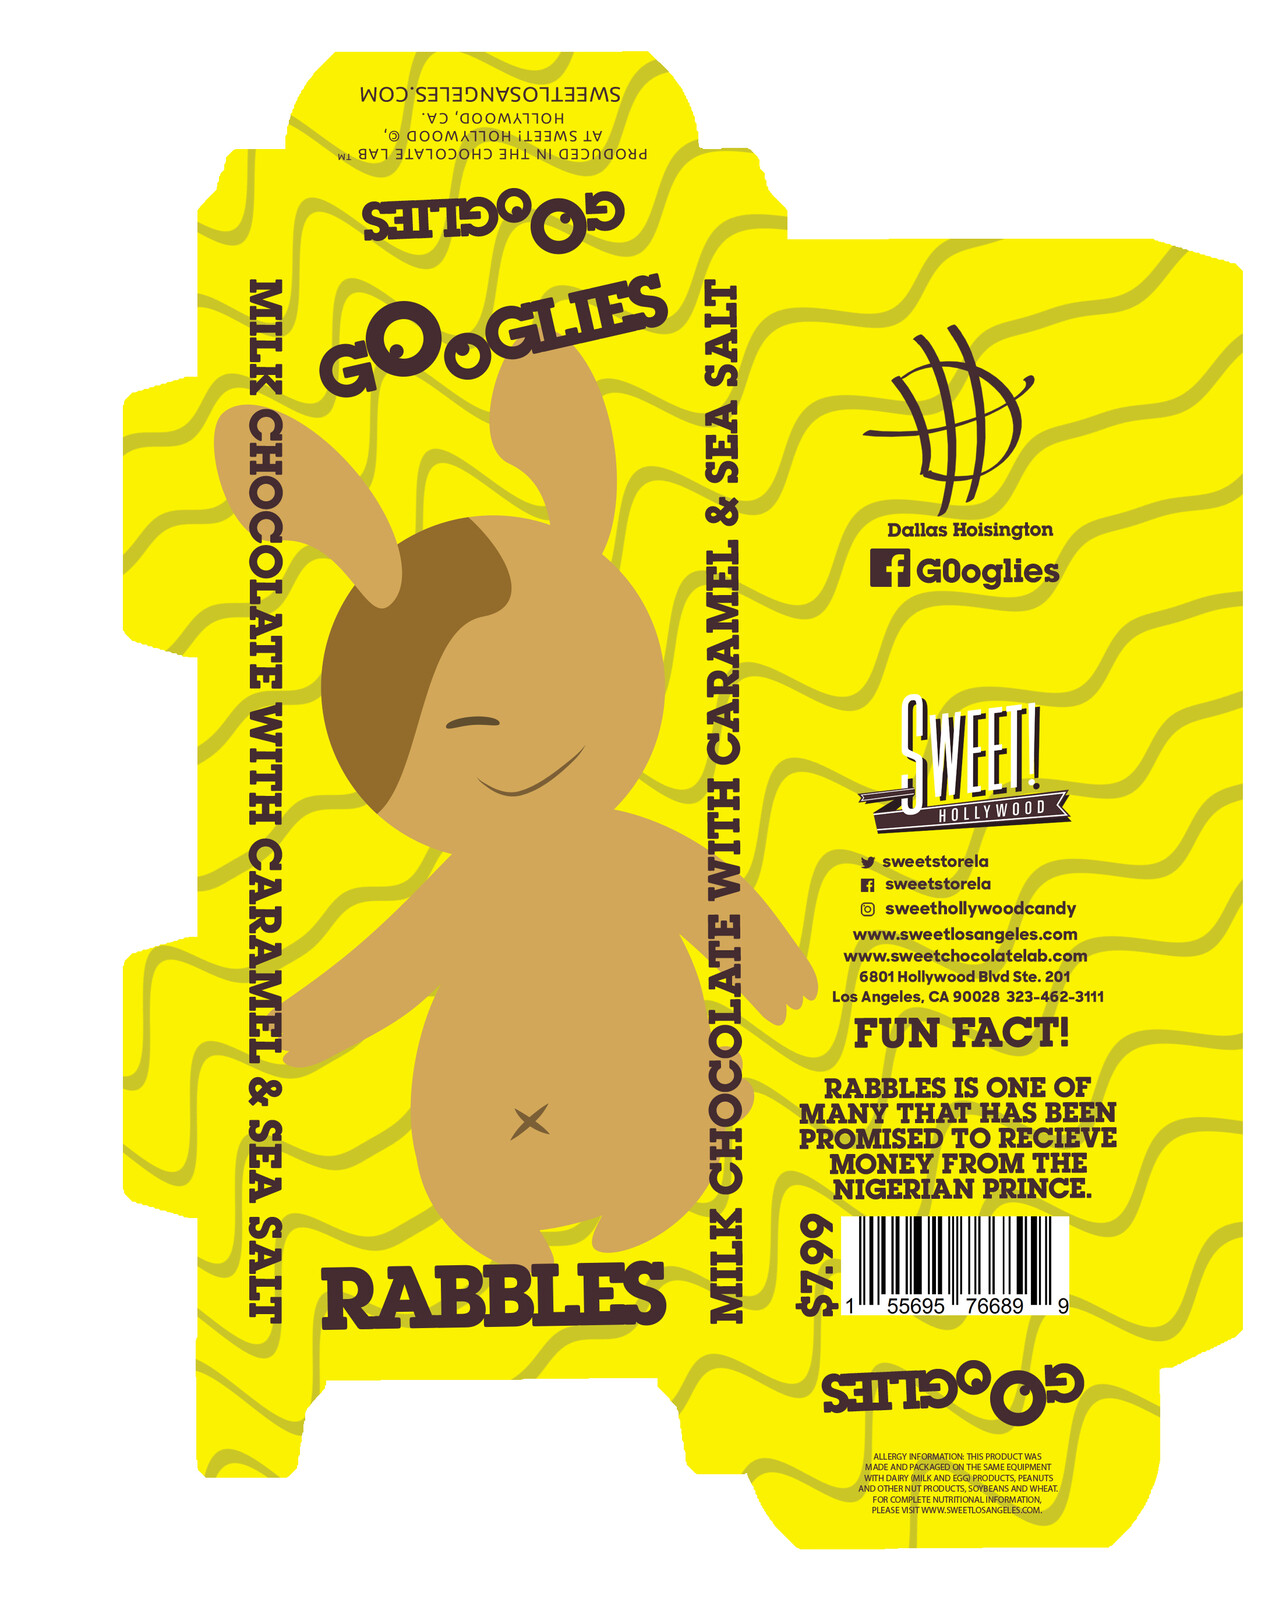 Rabbles bar design